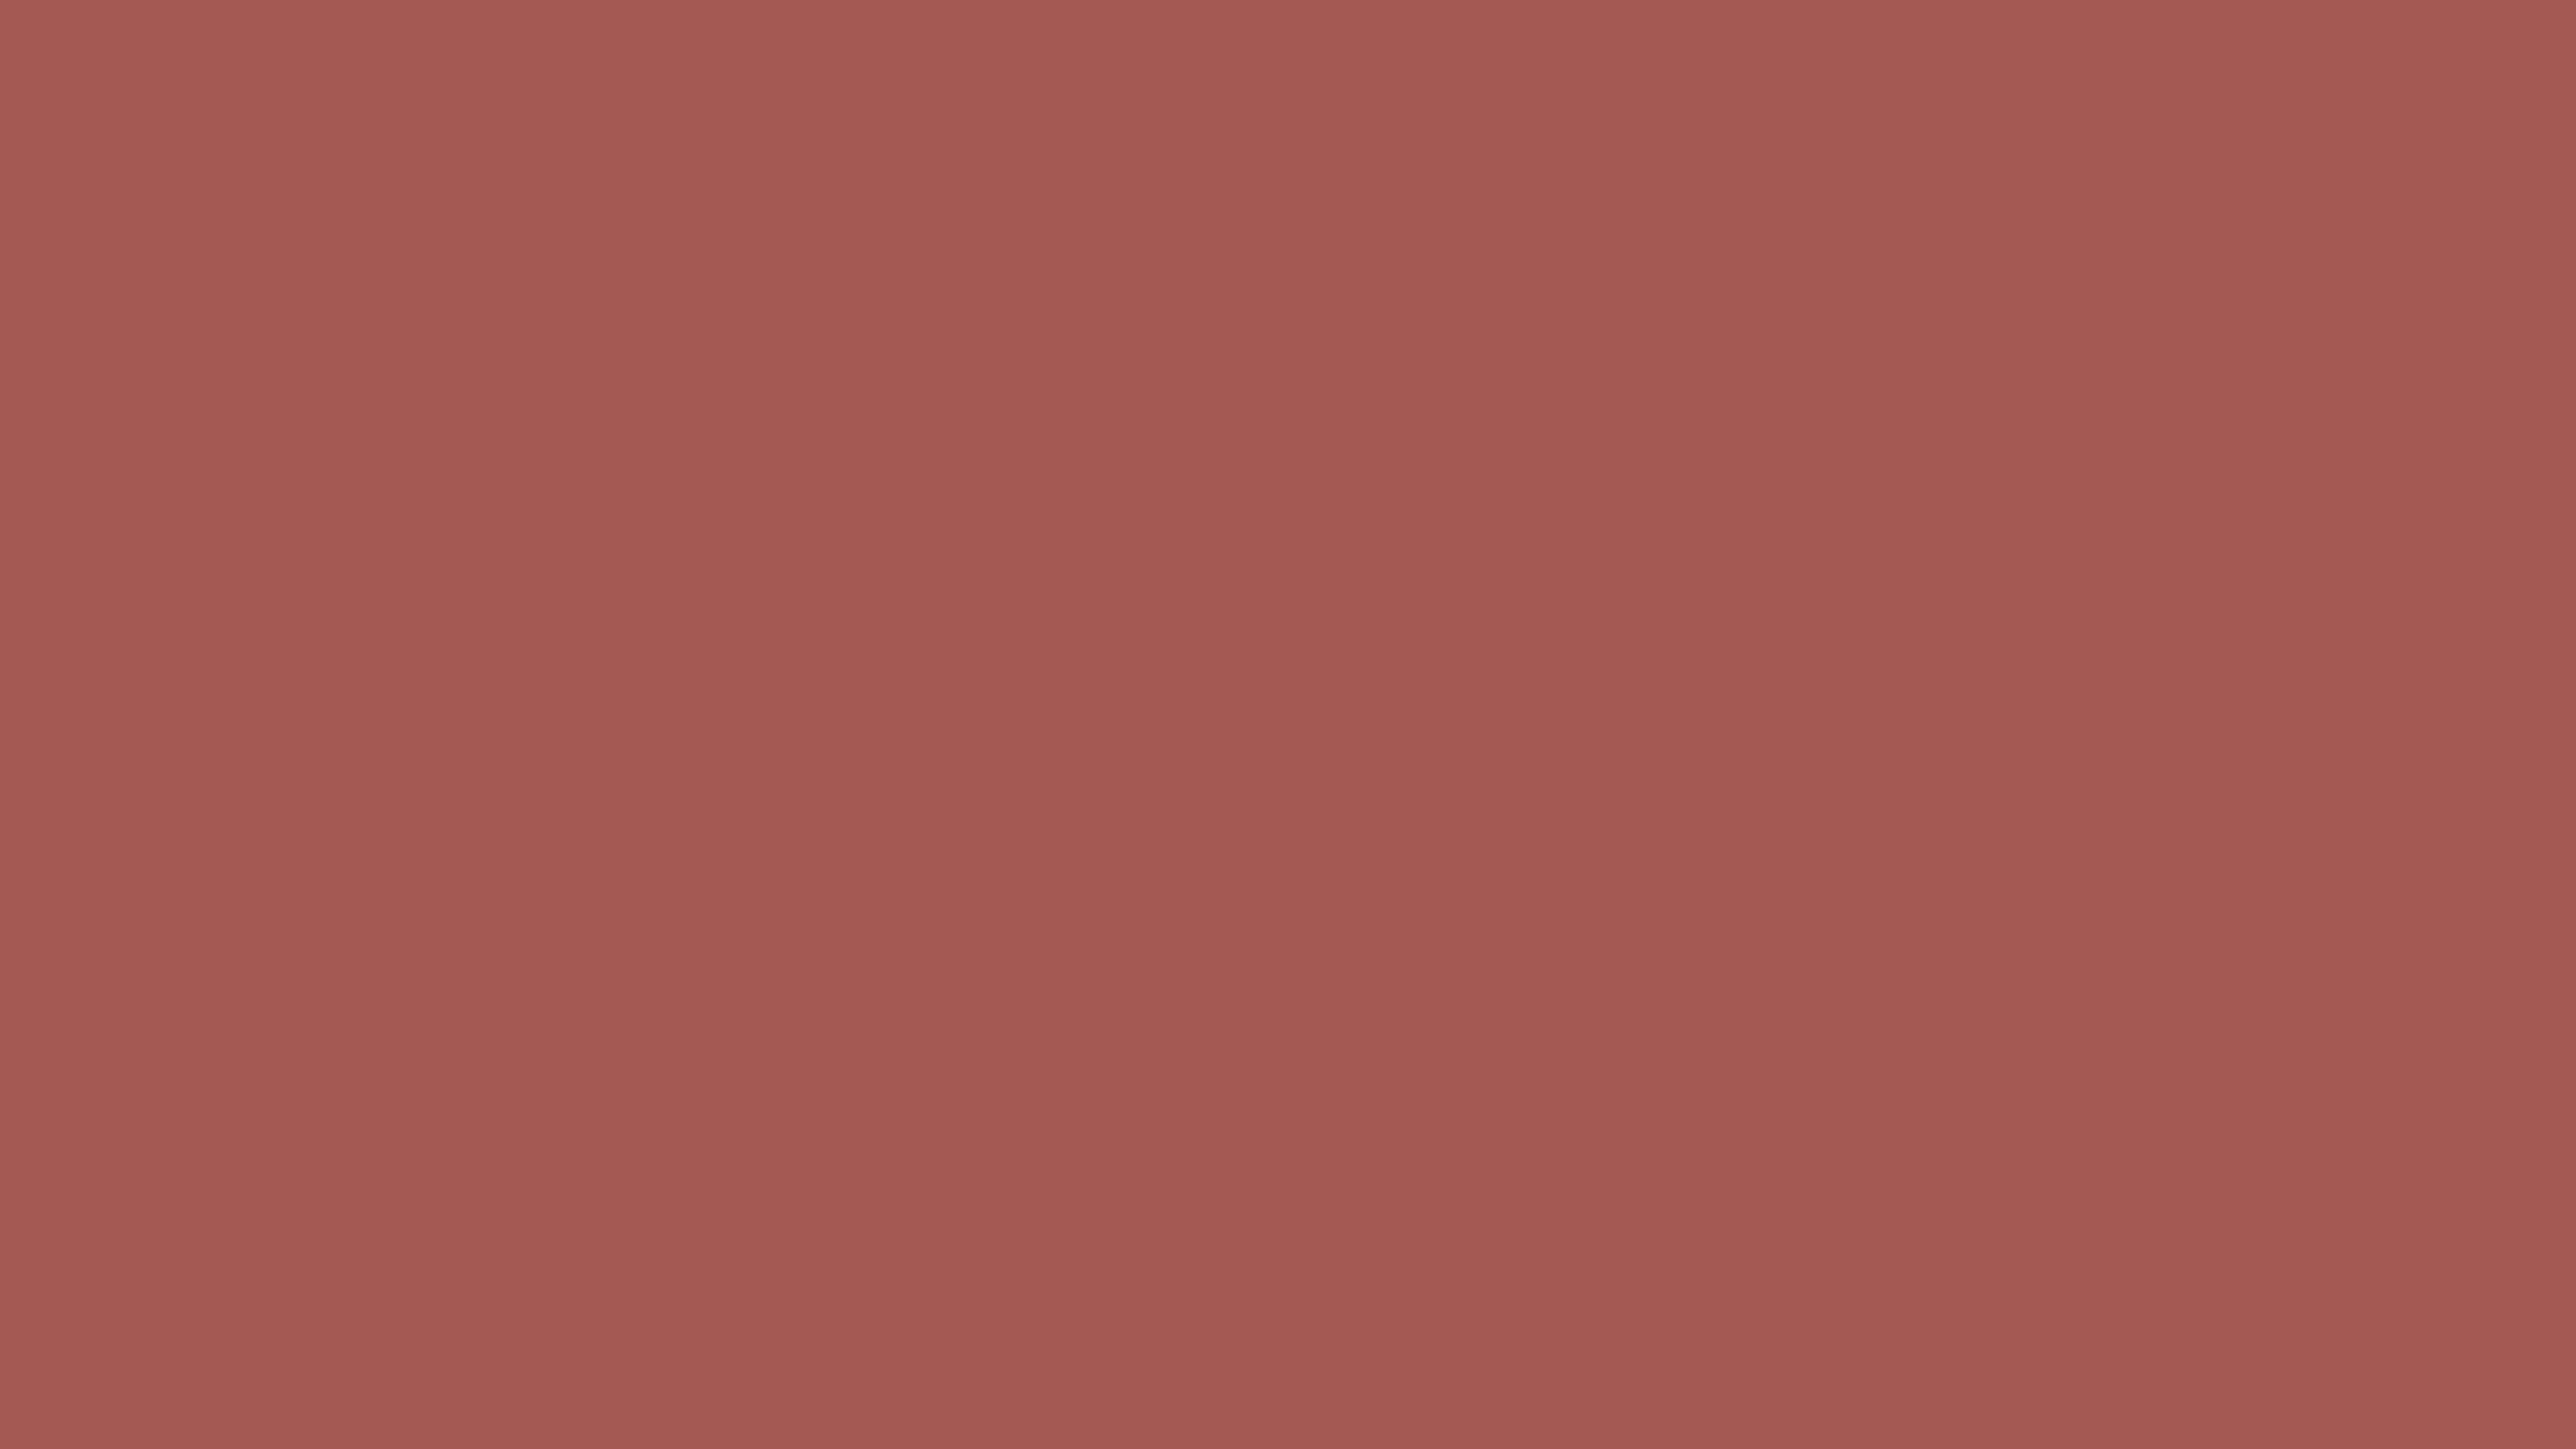 3840x2160 Redwood Solid Color Background